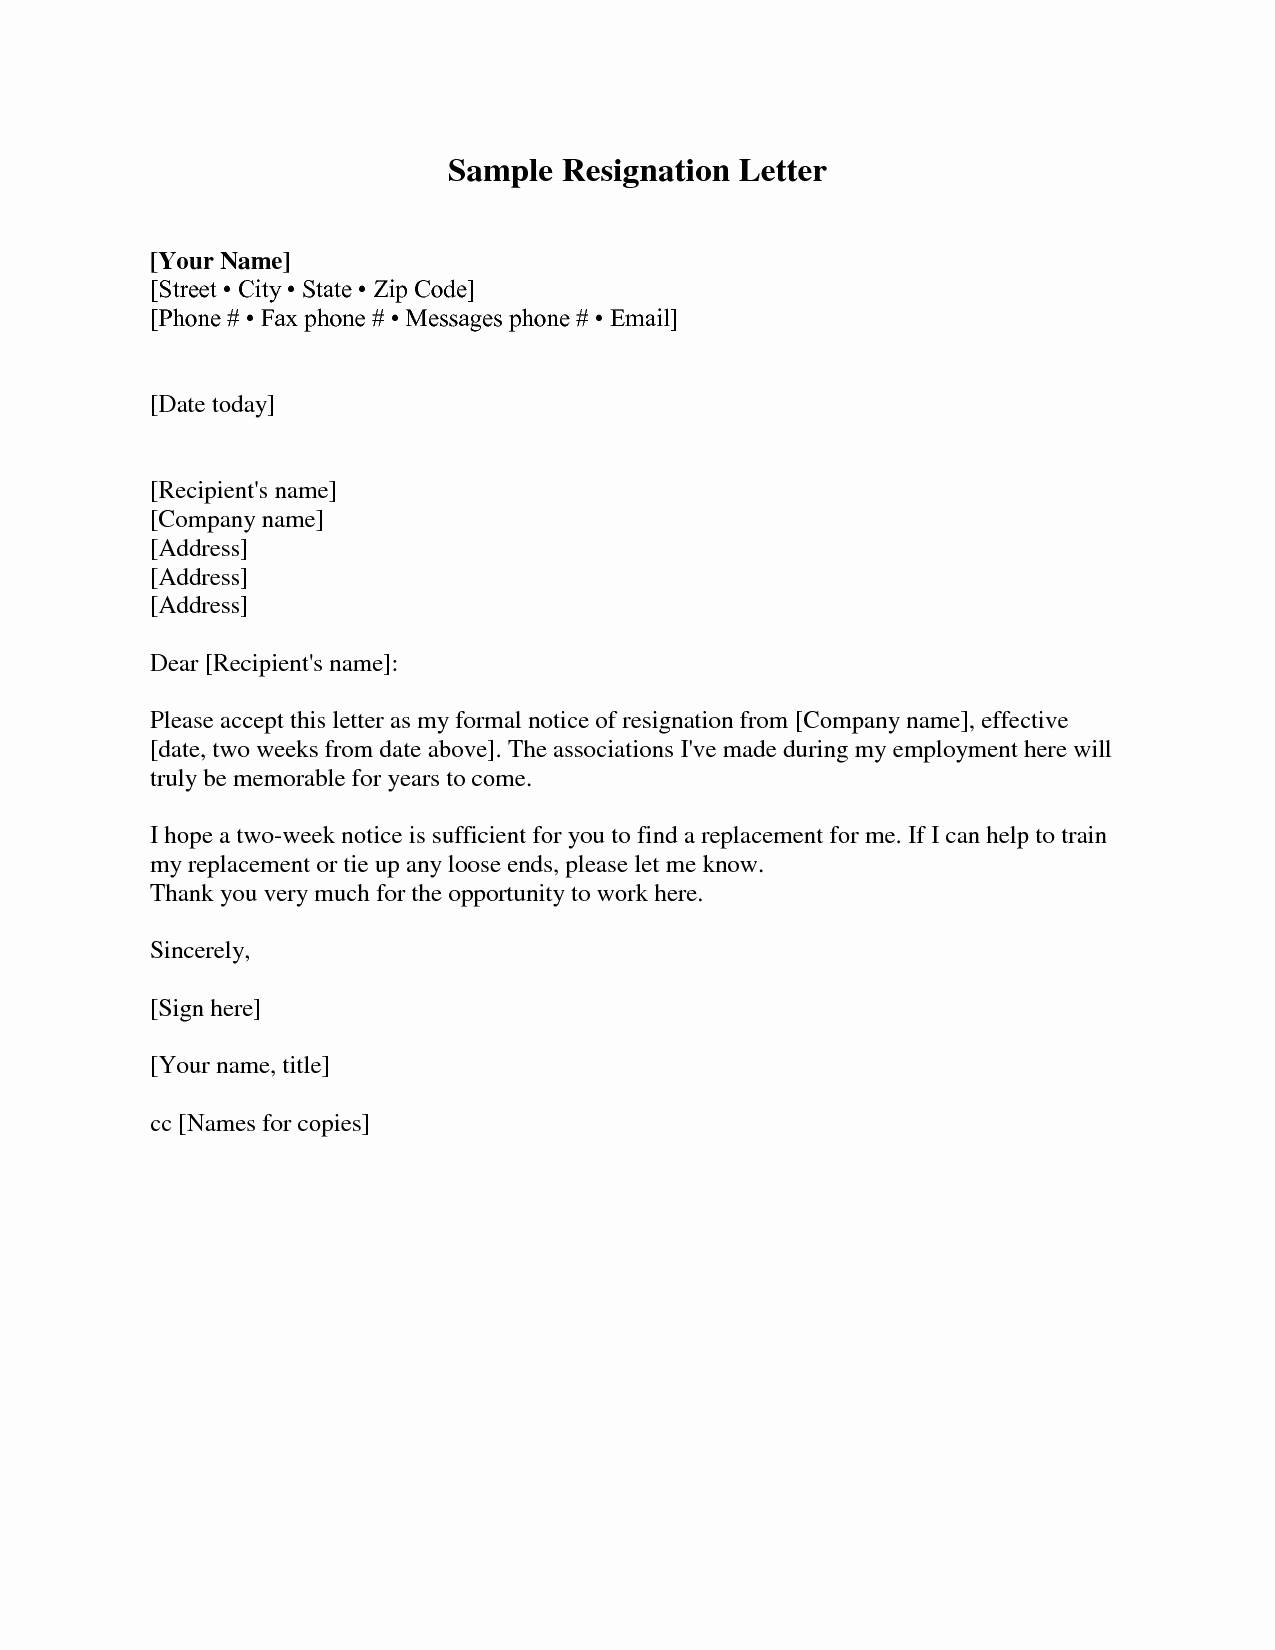 Letter Of Resignation Templates Unique Resignation Letter Sample 2 Weeks Notice